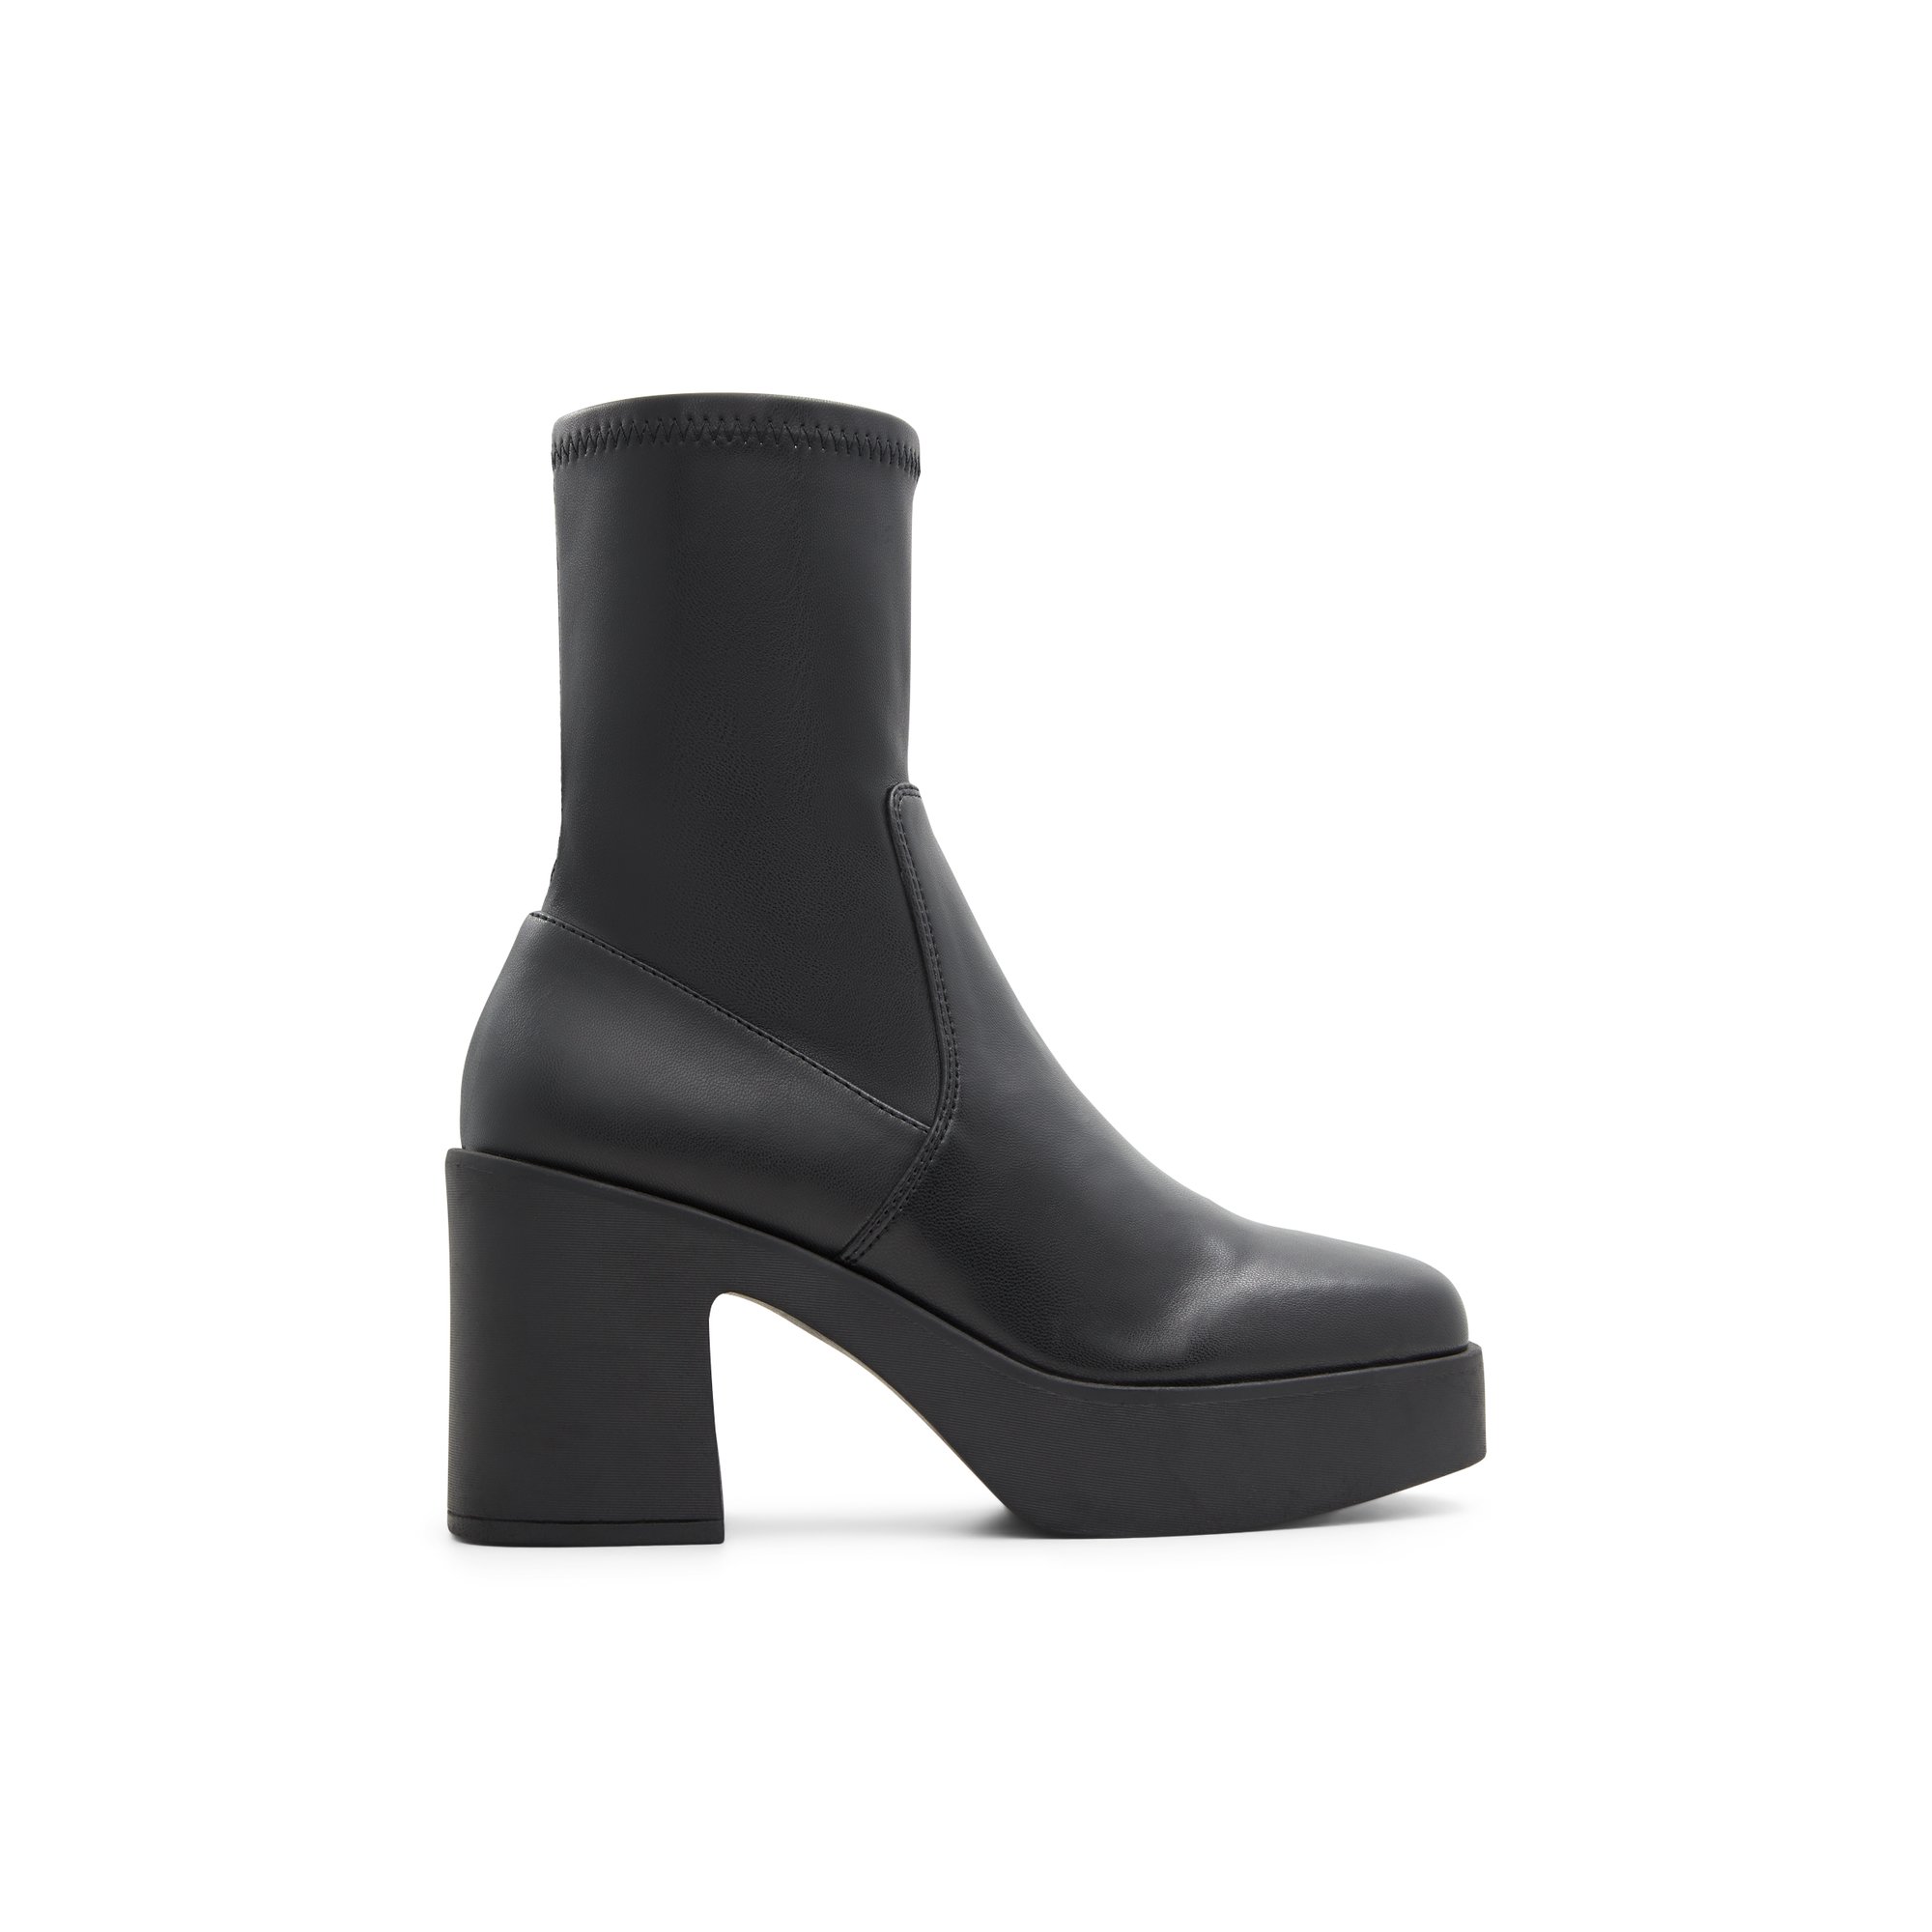 ALDO Upstep - Women's Boots Ankle - Black